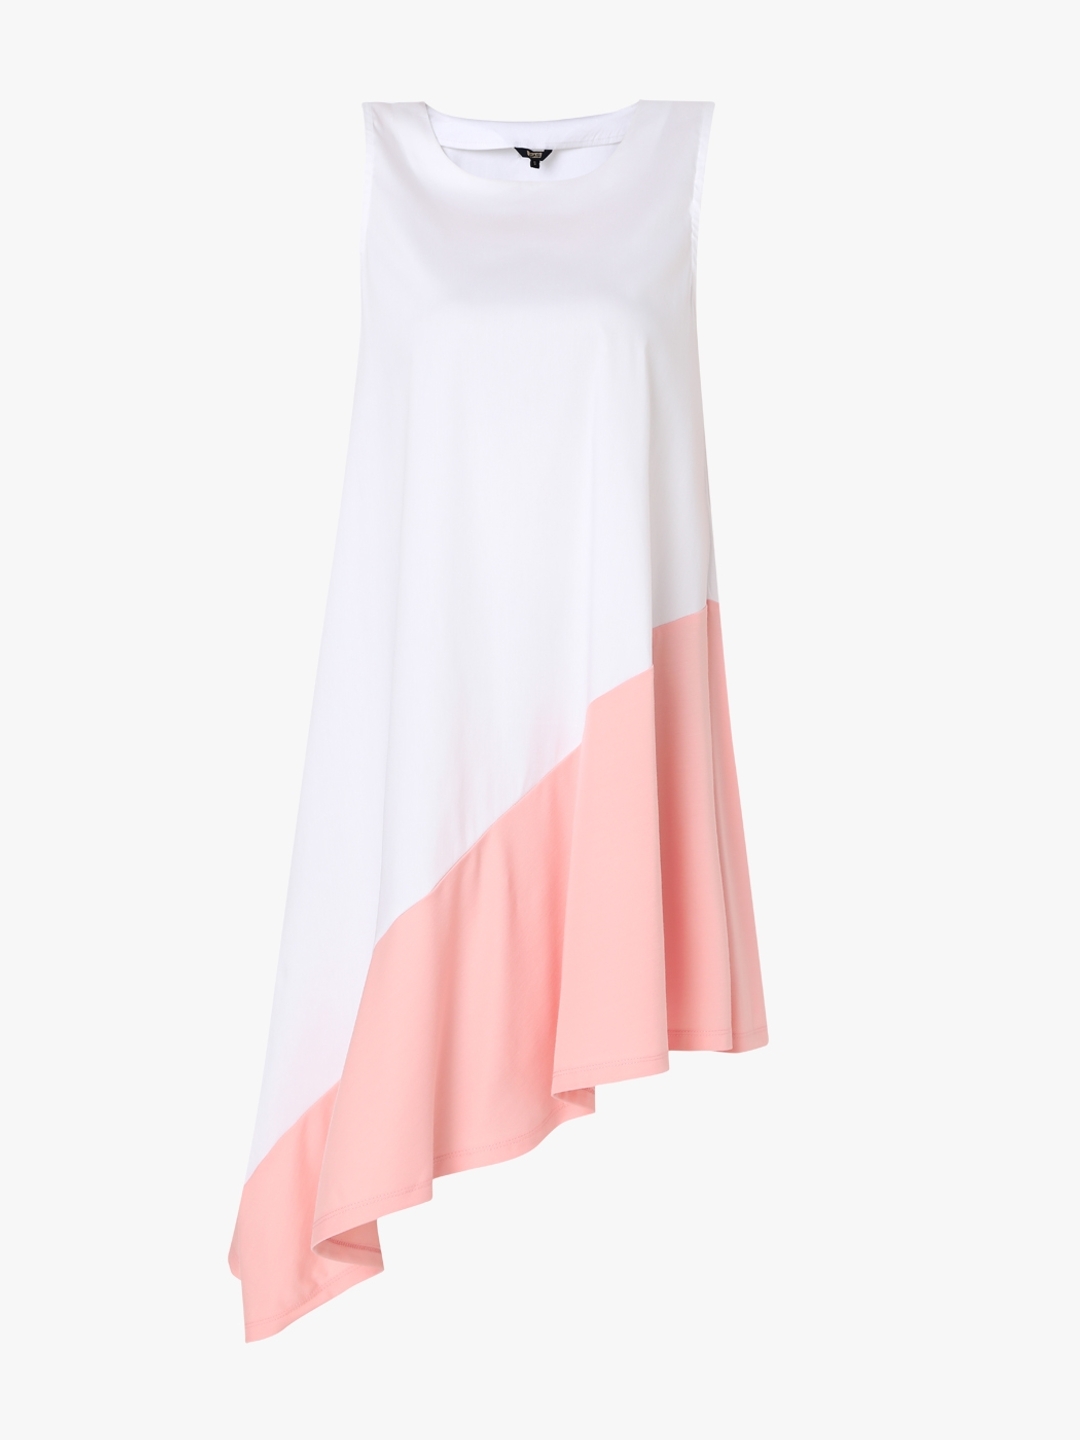 Colourblock A-line Dress with High-Low Hemline